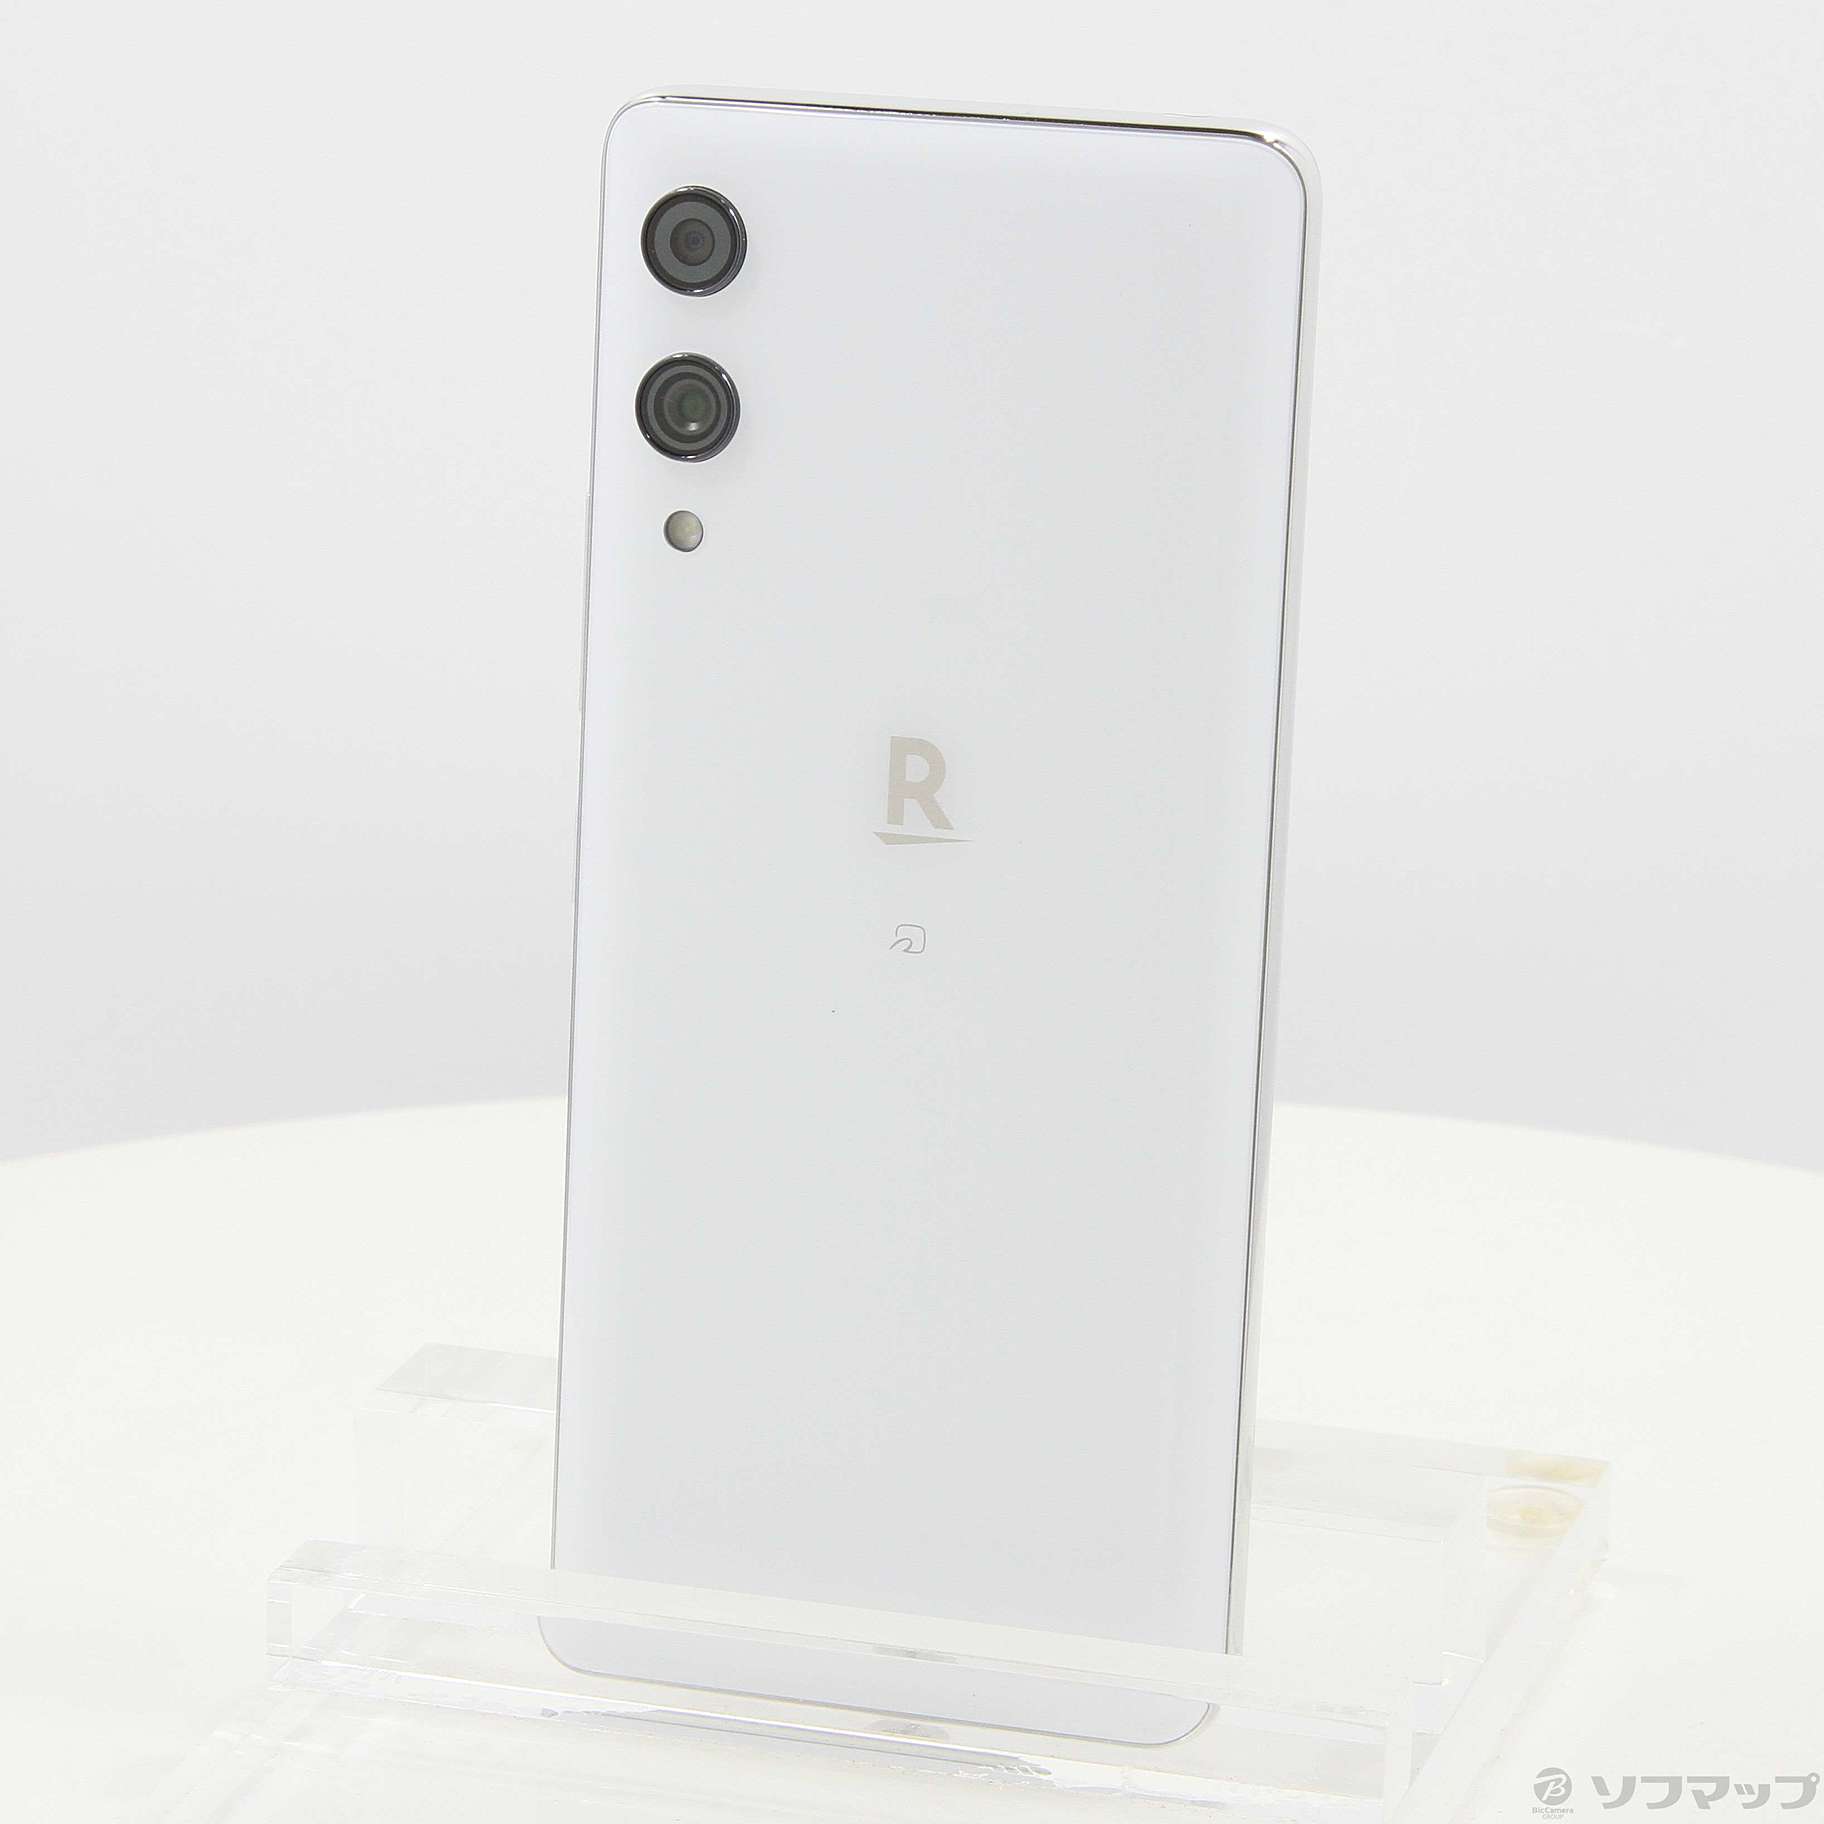 Rakuten Hand 64GB ホワイト - スマートフォン本体